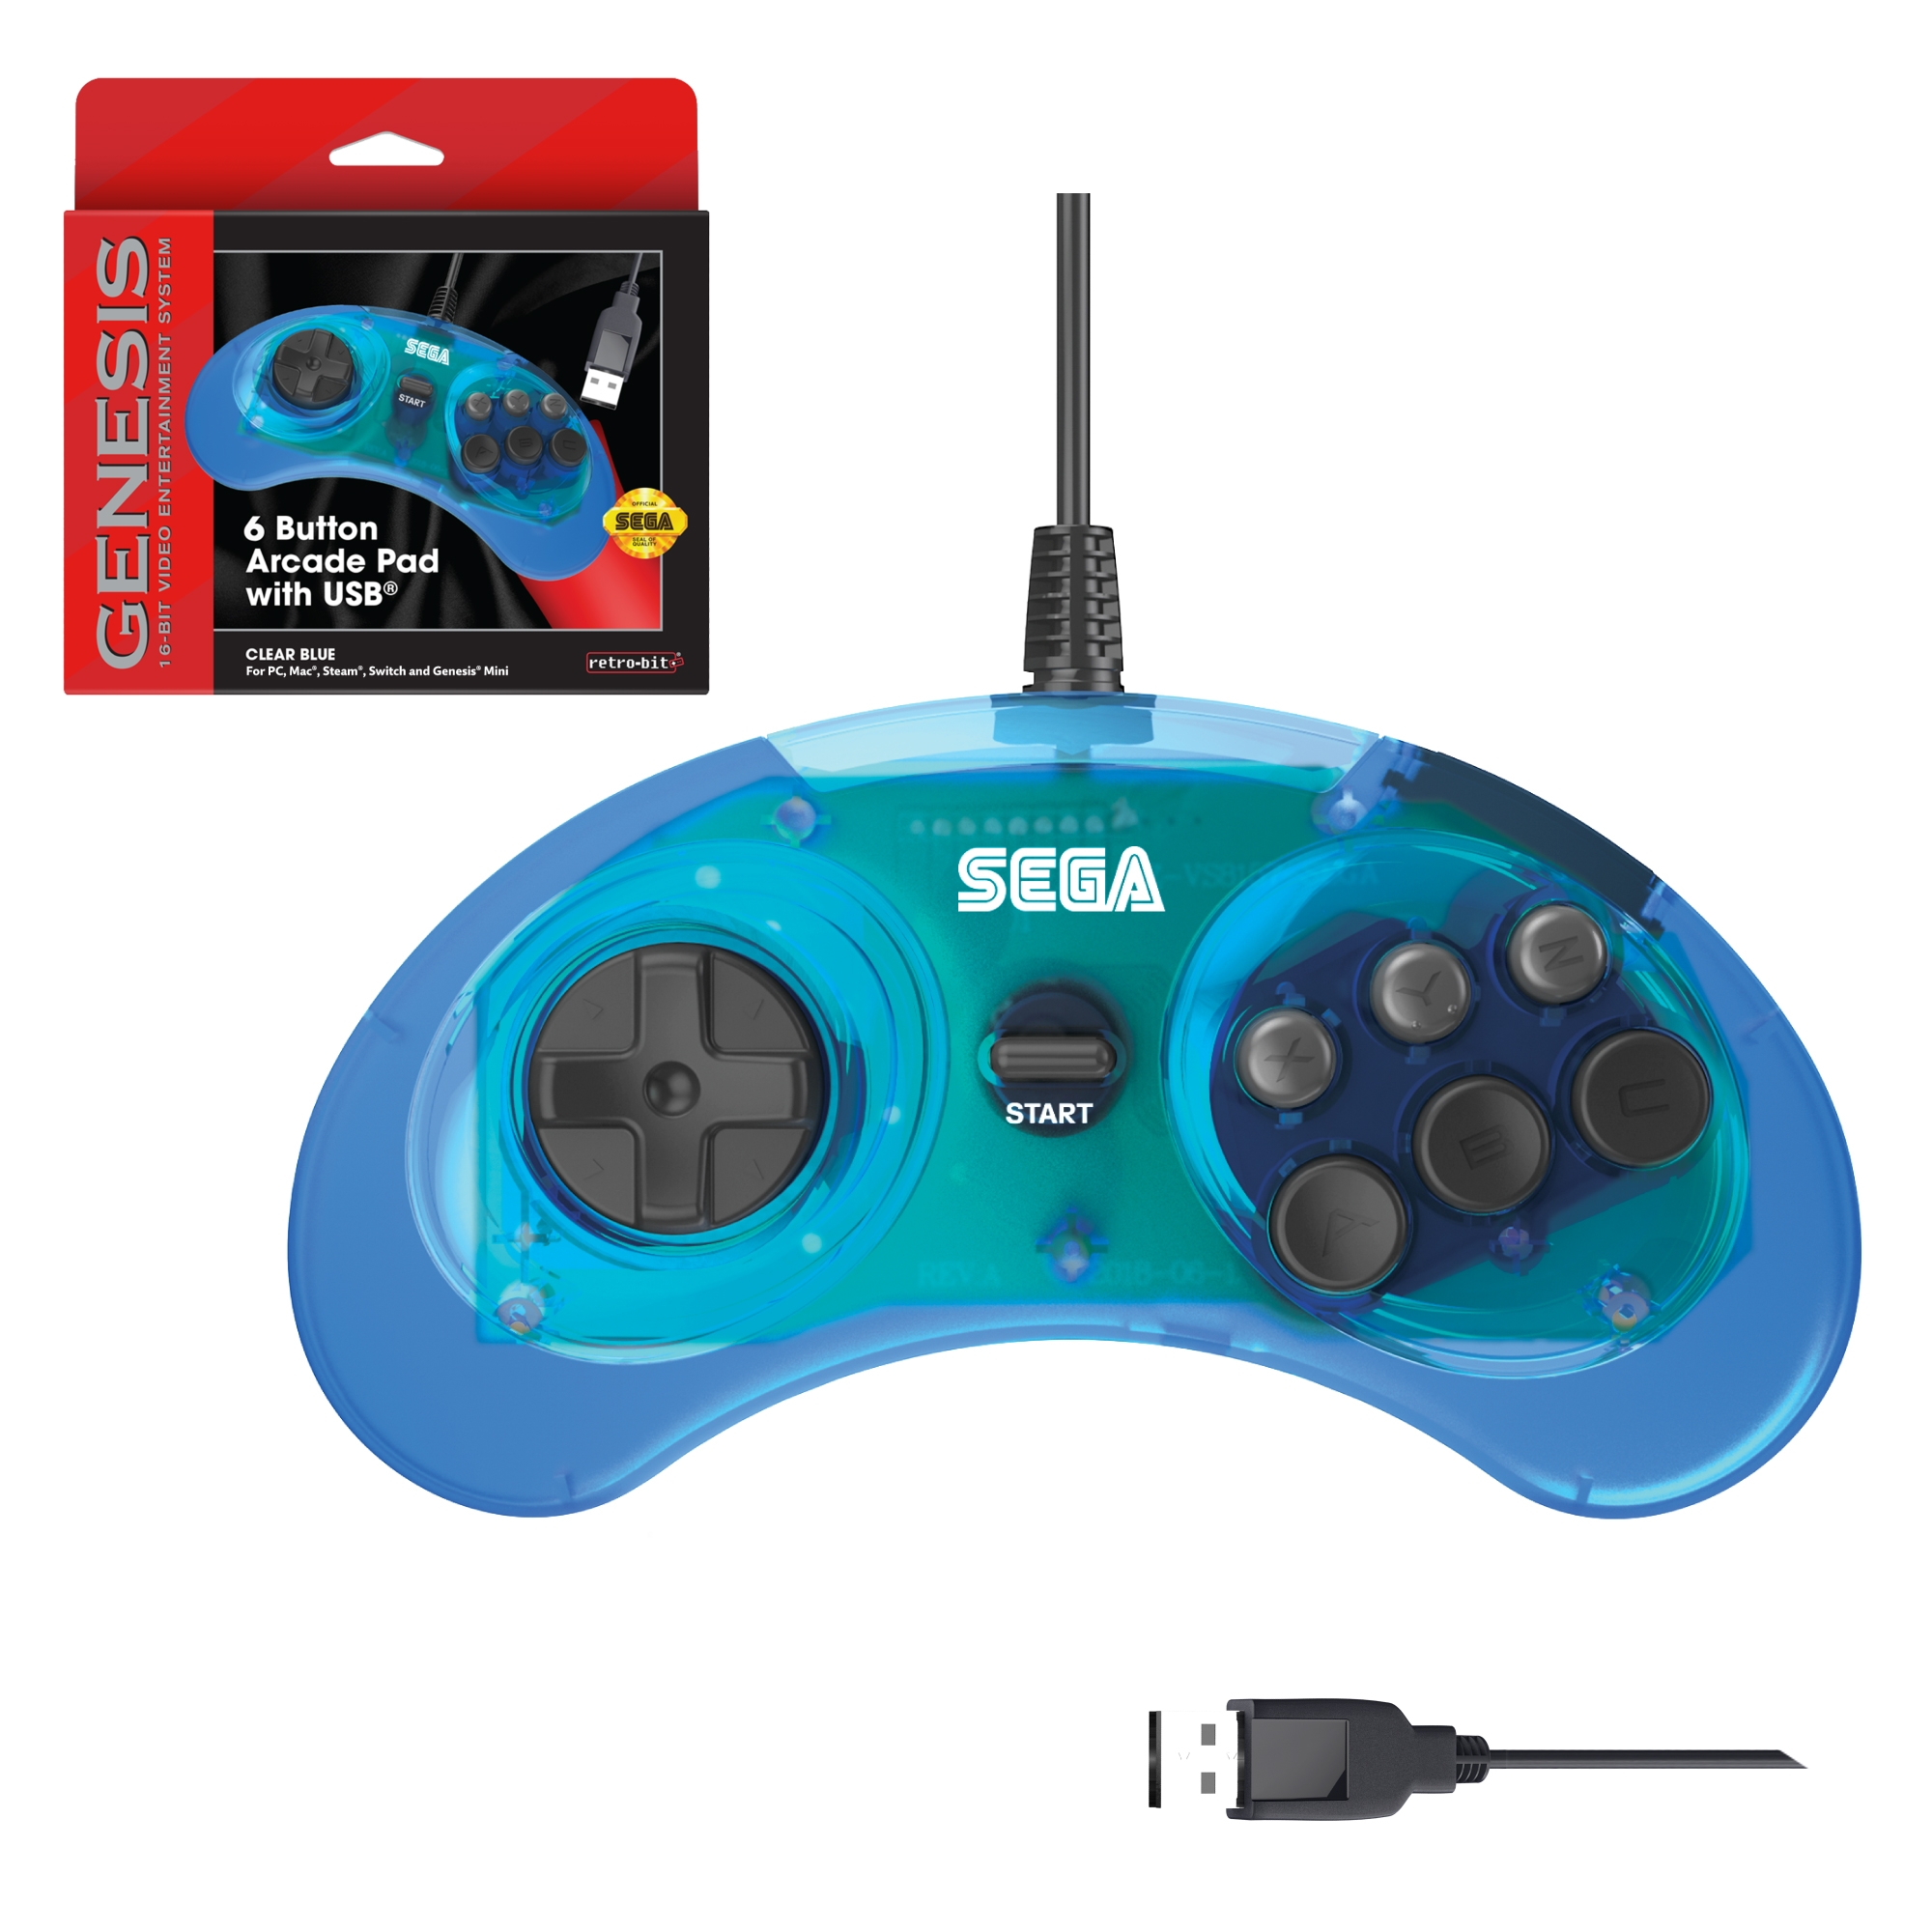 SEGA Genesis Mini 6 Button USB Arcade Pad - Clear Blue